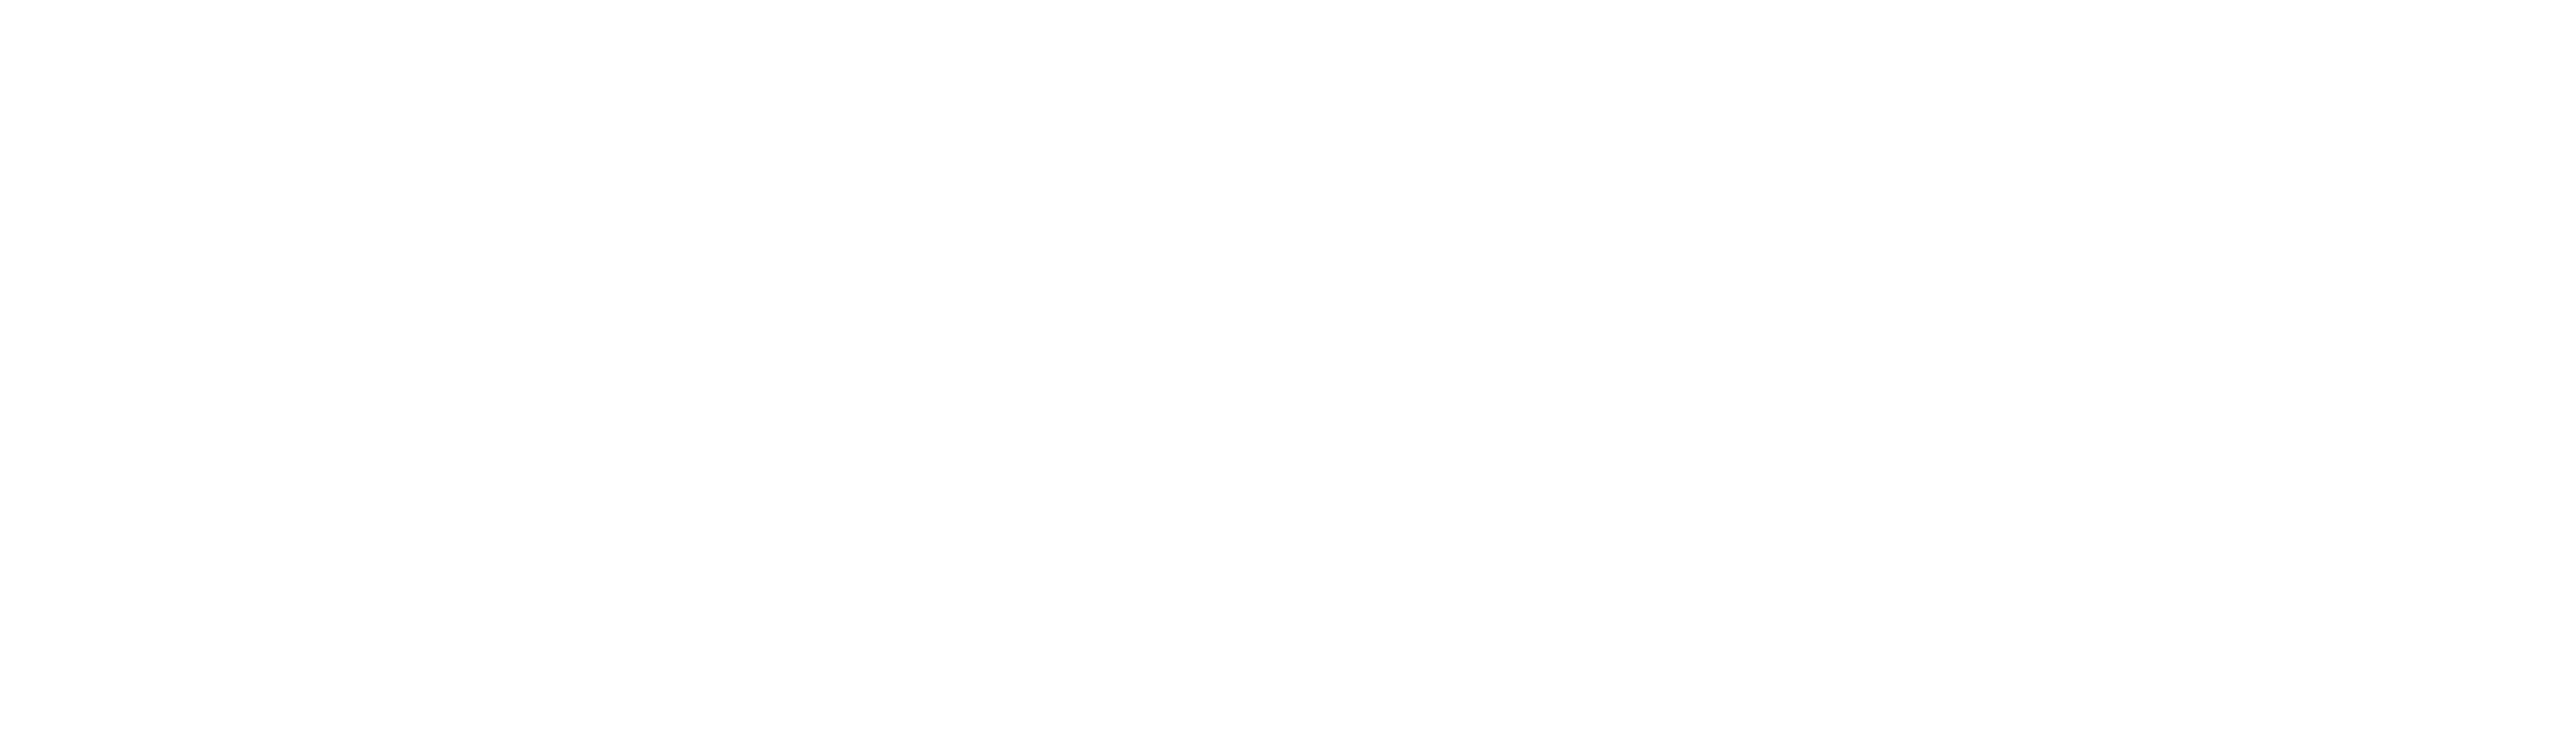 Scalers Logo